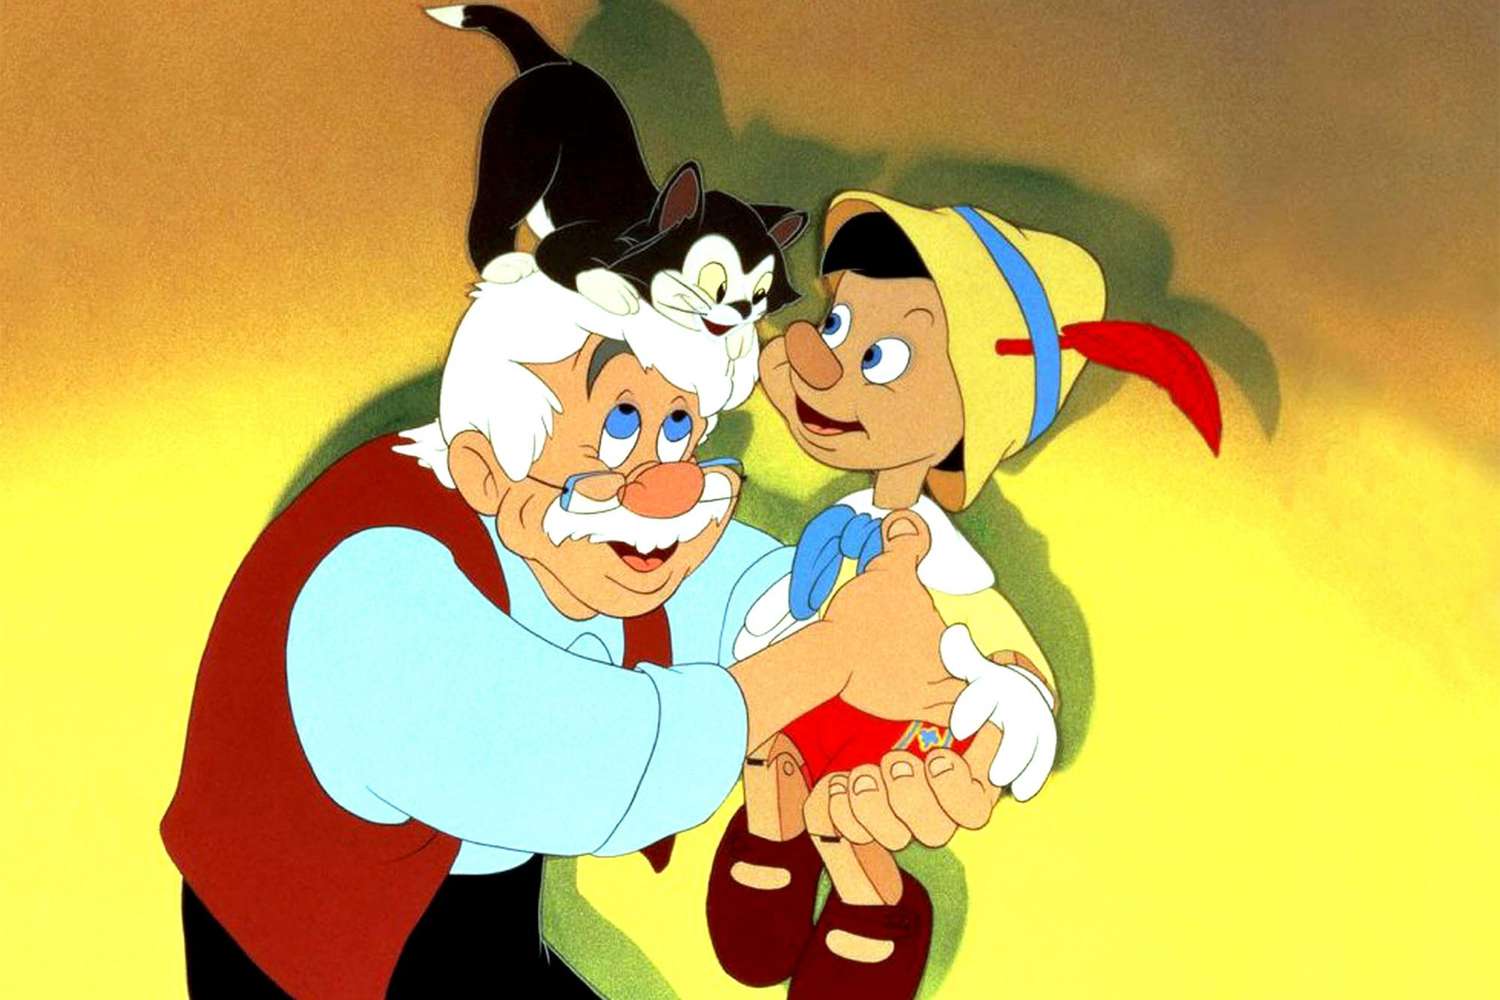 PINOCCHIO, Geppetto, Pinocchio, 1940, (c) Walt Disney/courtesy Everett Collection